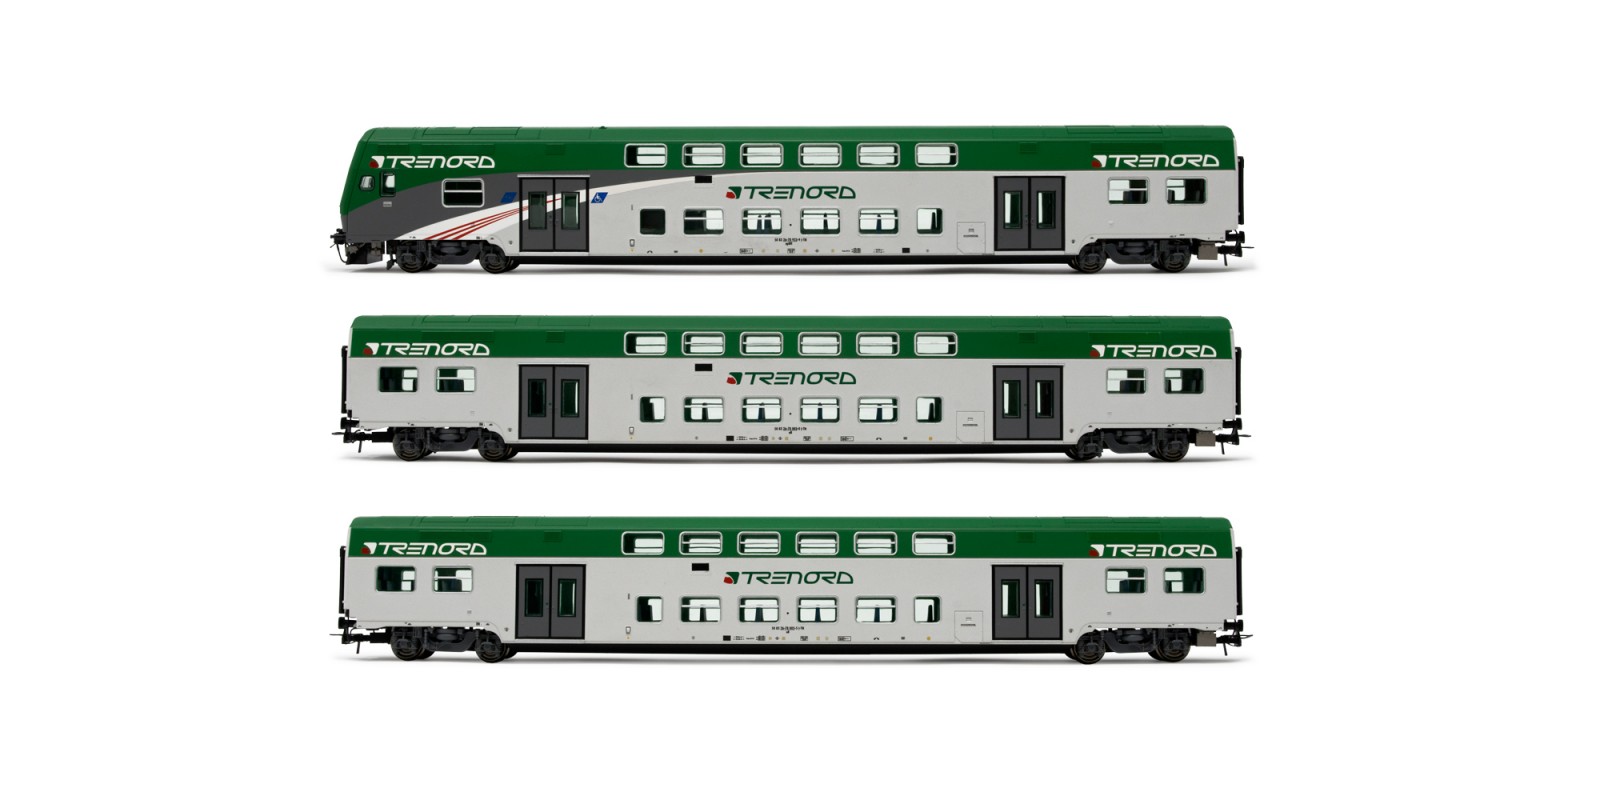 LI5052 Trenord, 3-unit pack Vivalto coaches (1 with driver's cab + 2 intermediate coaches)